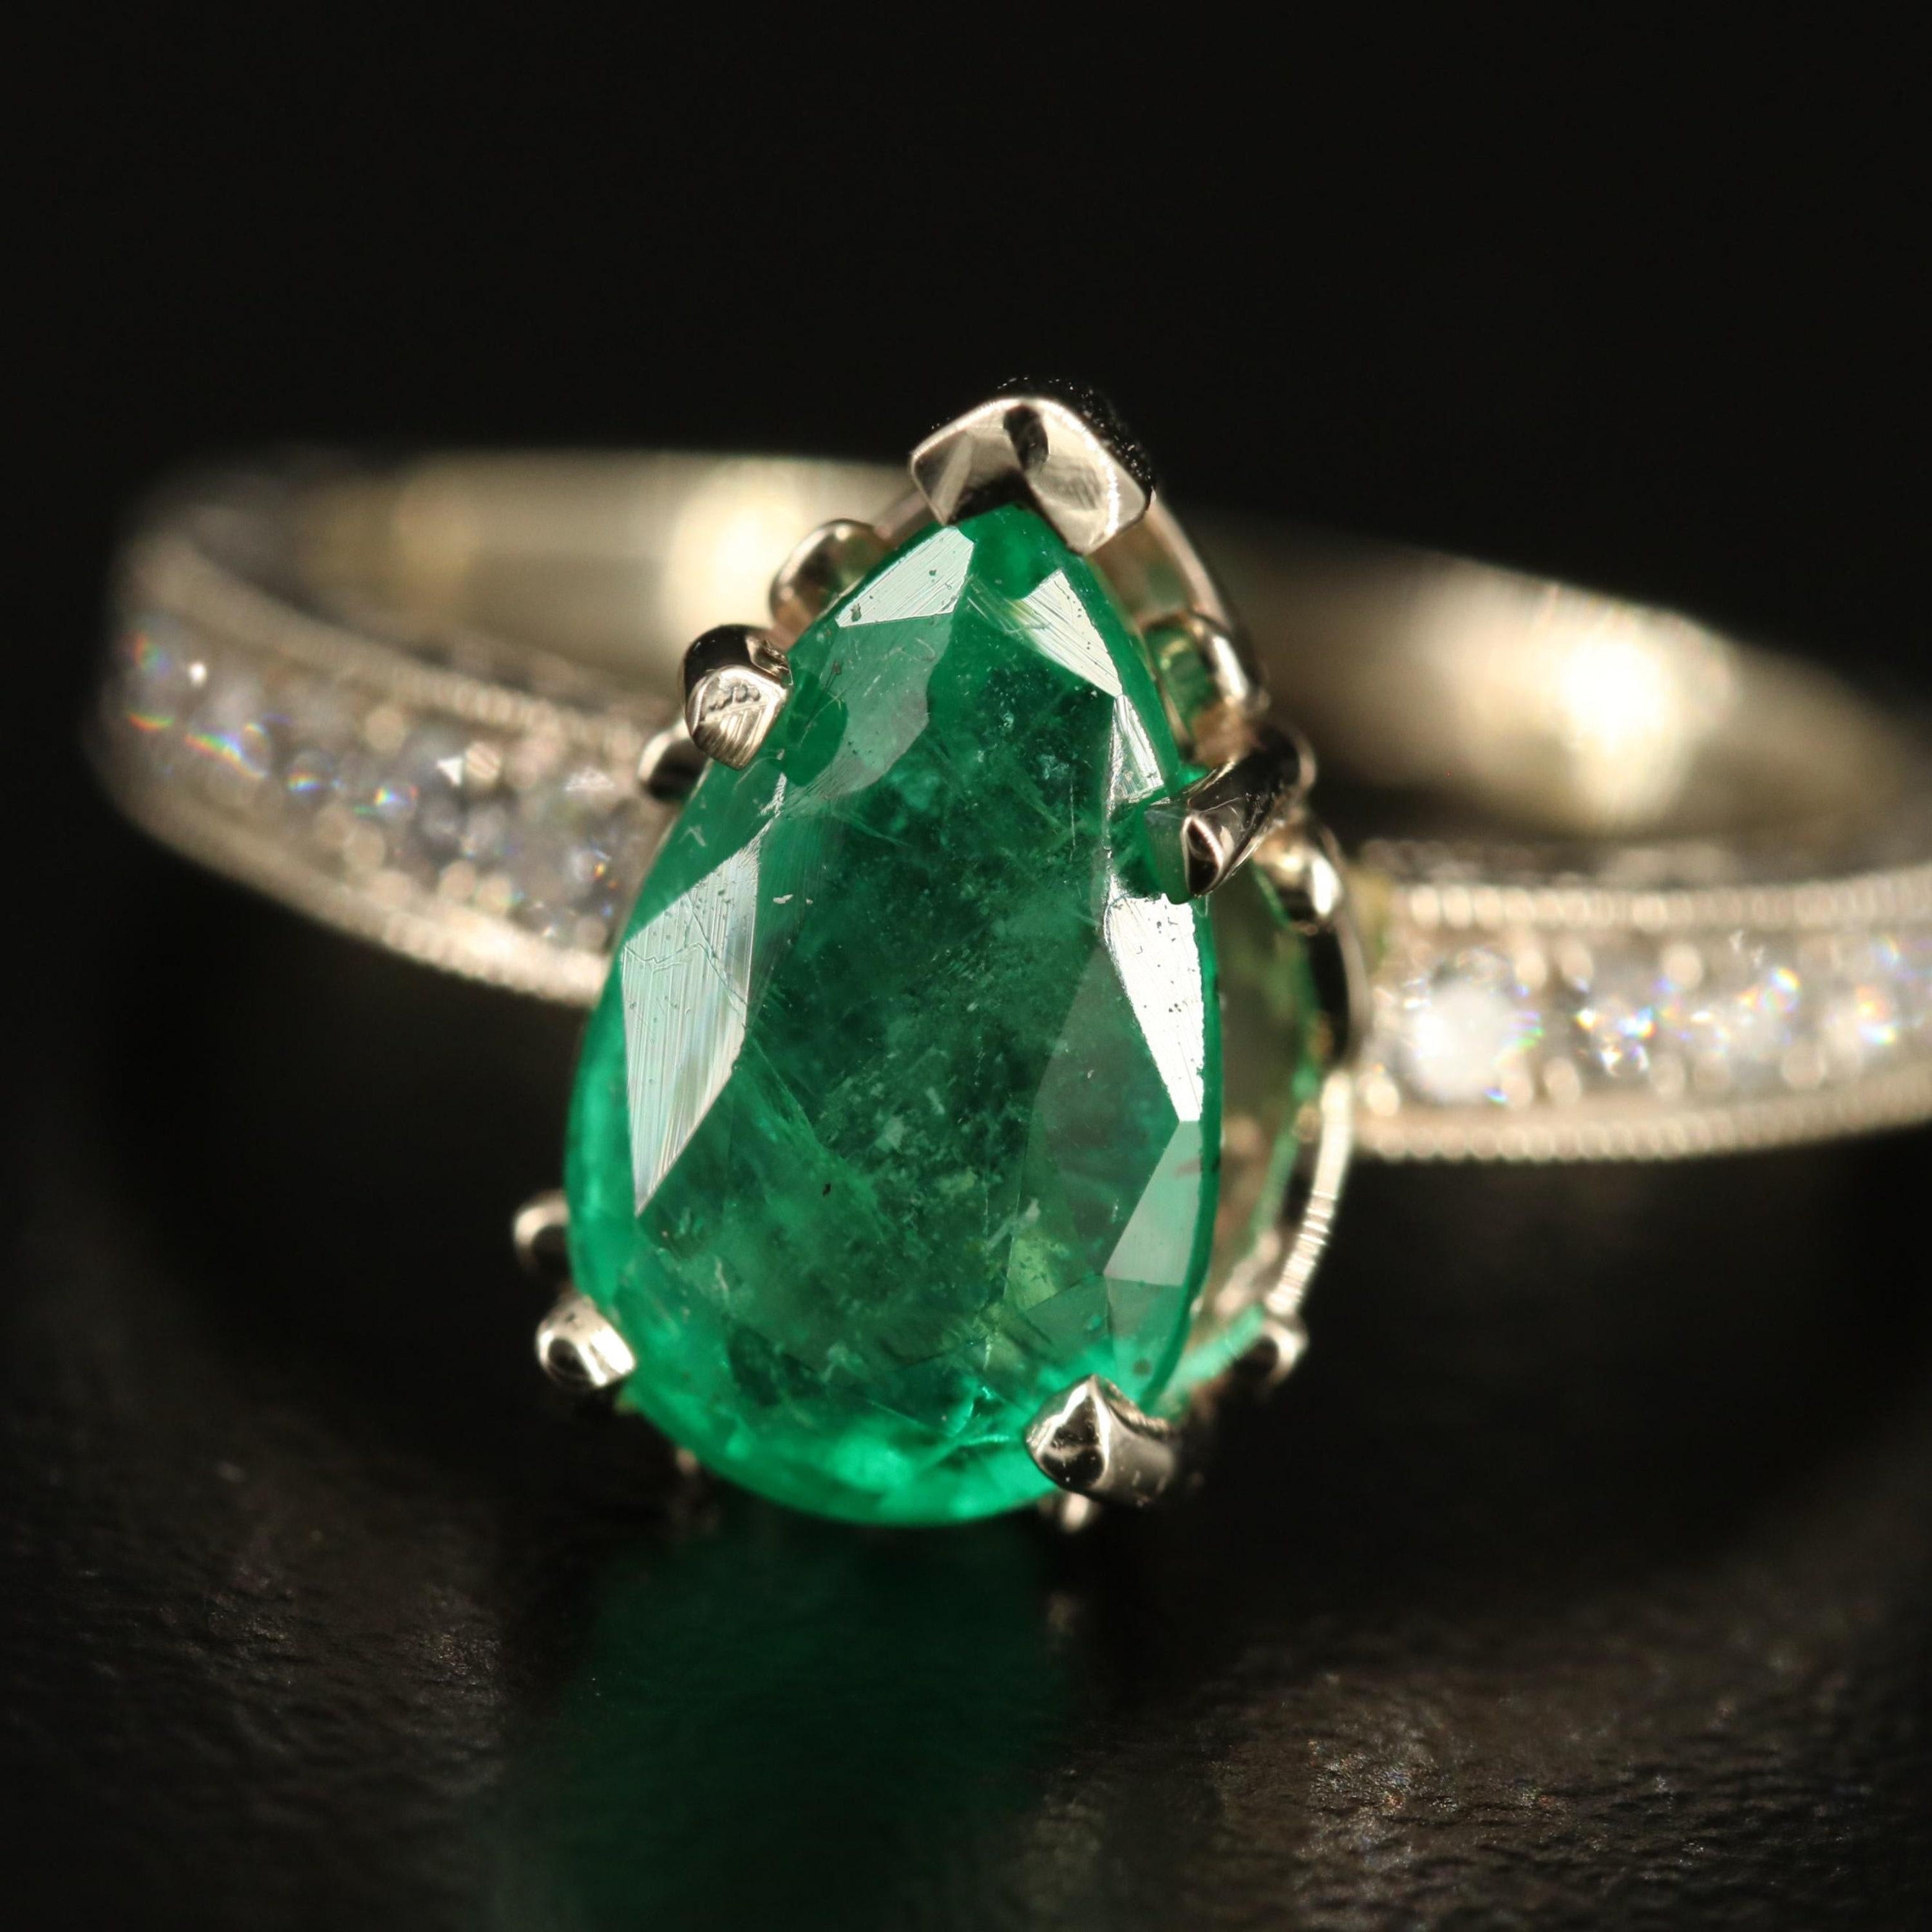 For Sale:  1.5 Carat Pear Cut Emerald Diamond Engagement Ring Minimalist Gold Wedding Ring 2